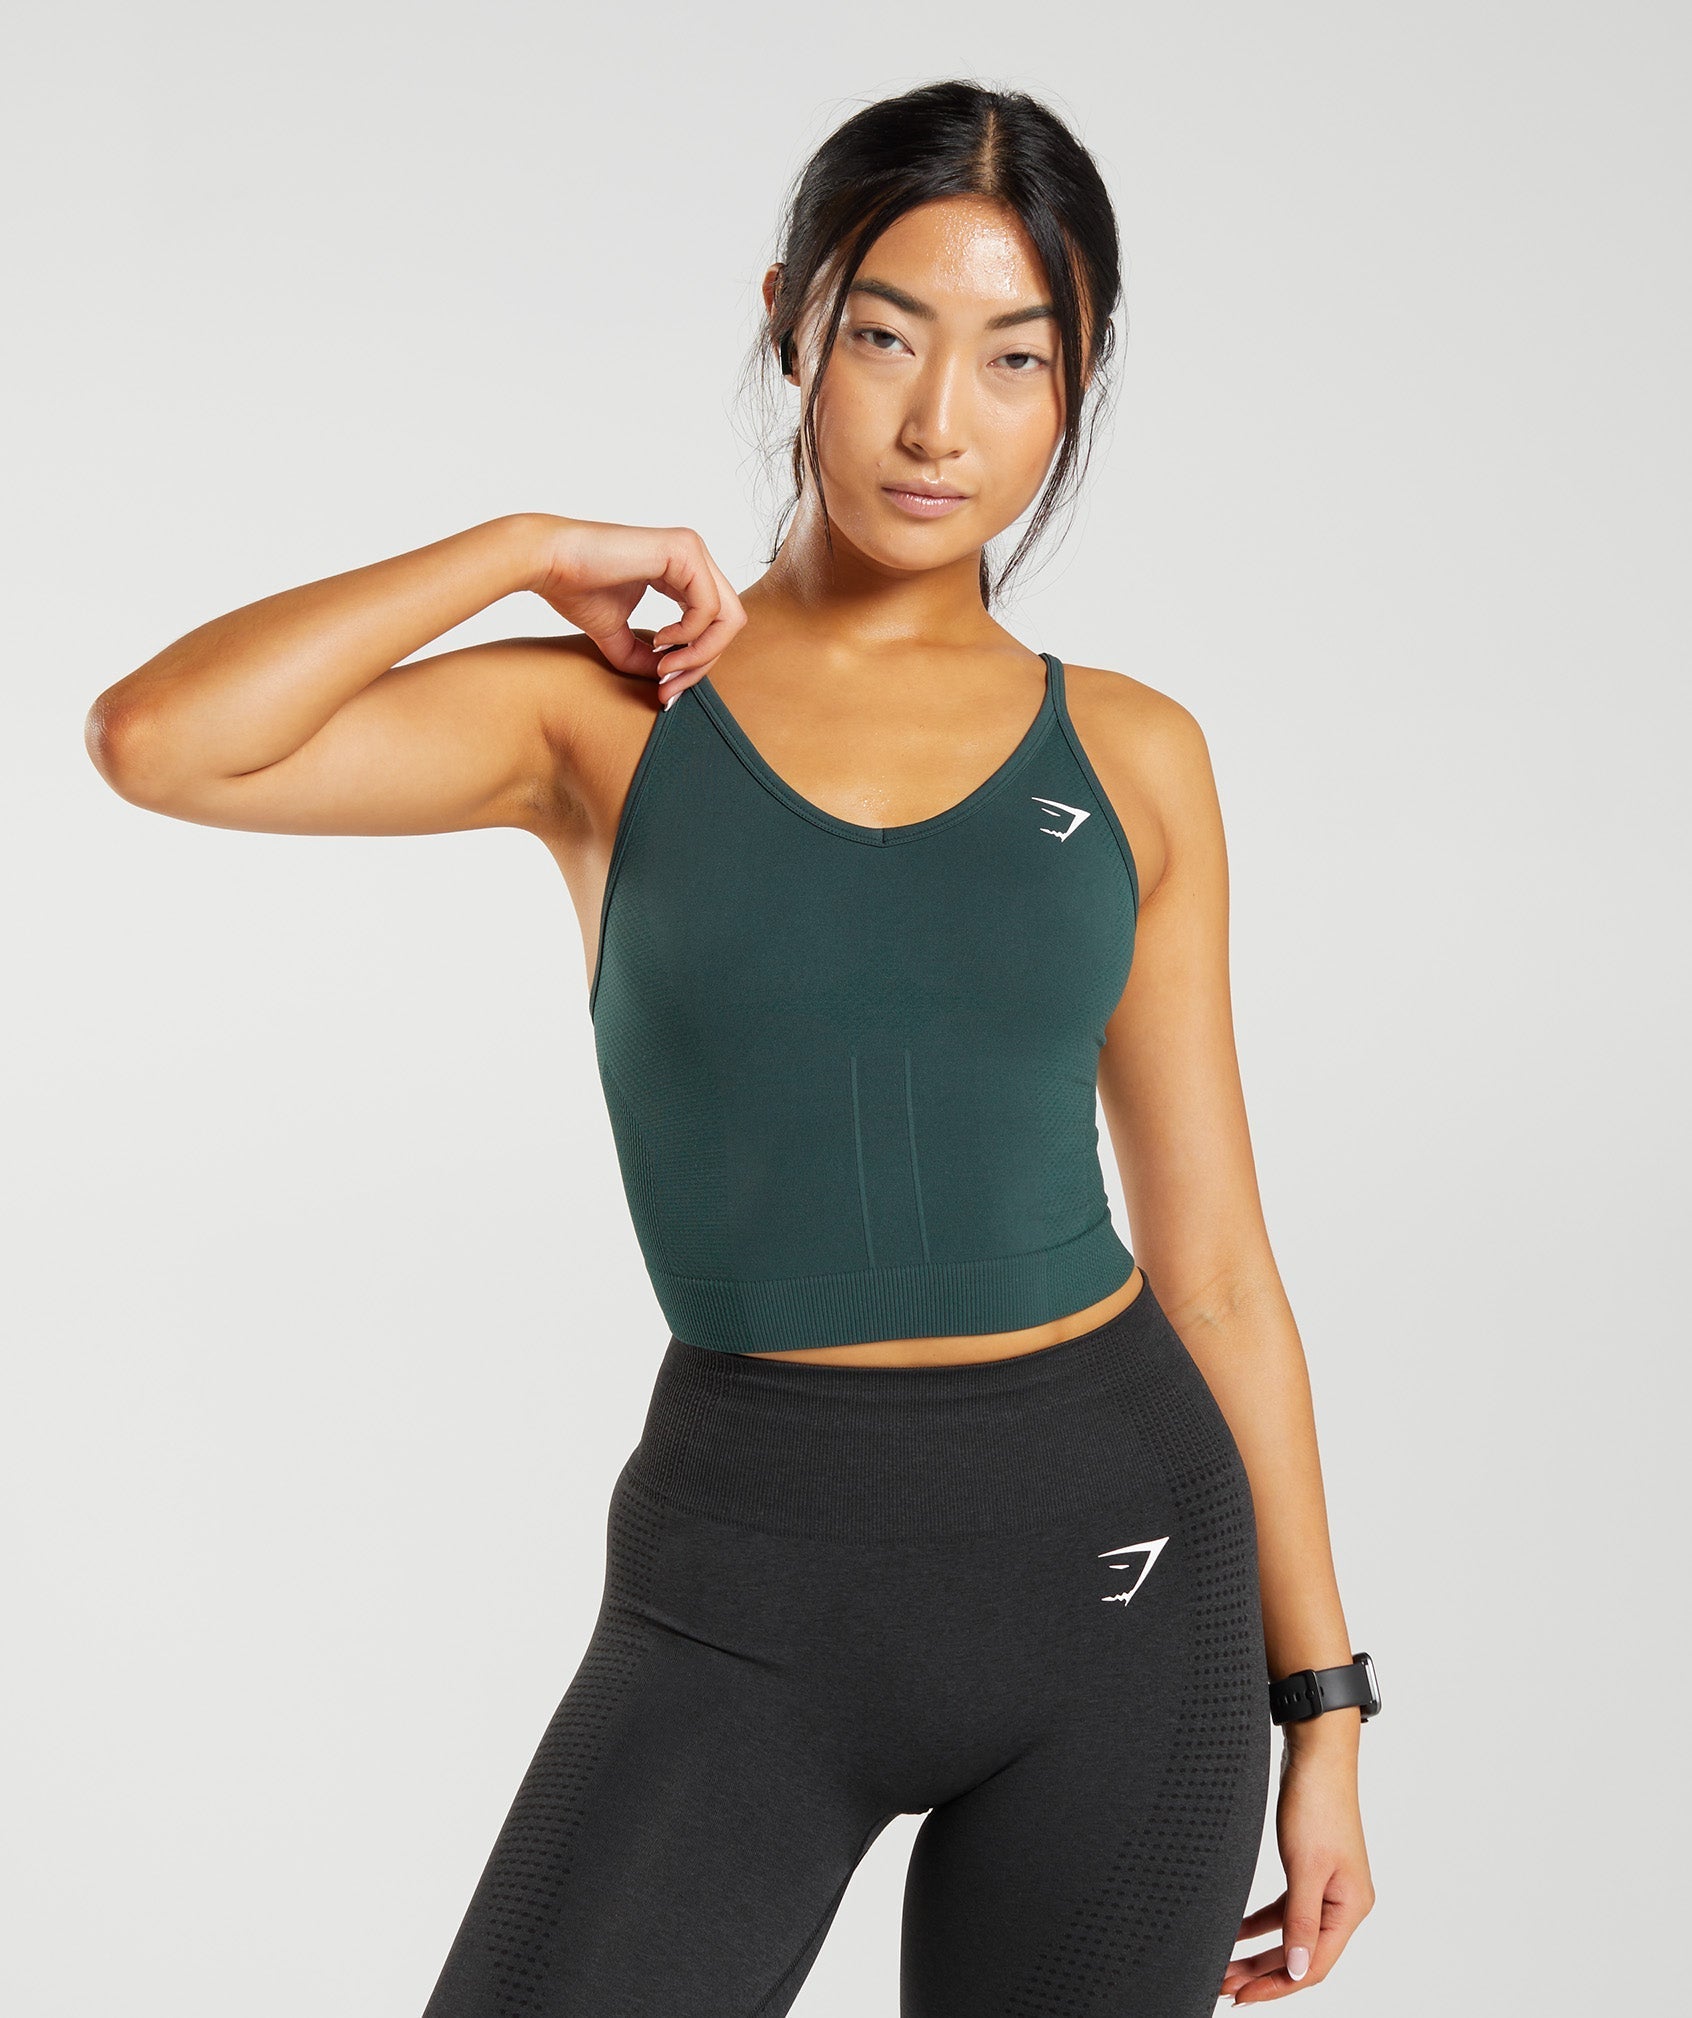 Women's Sports Bra - Breathable Nylon Gymshark Bandeau Top For Fitness &  Yoga